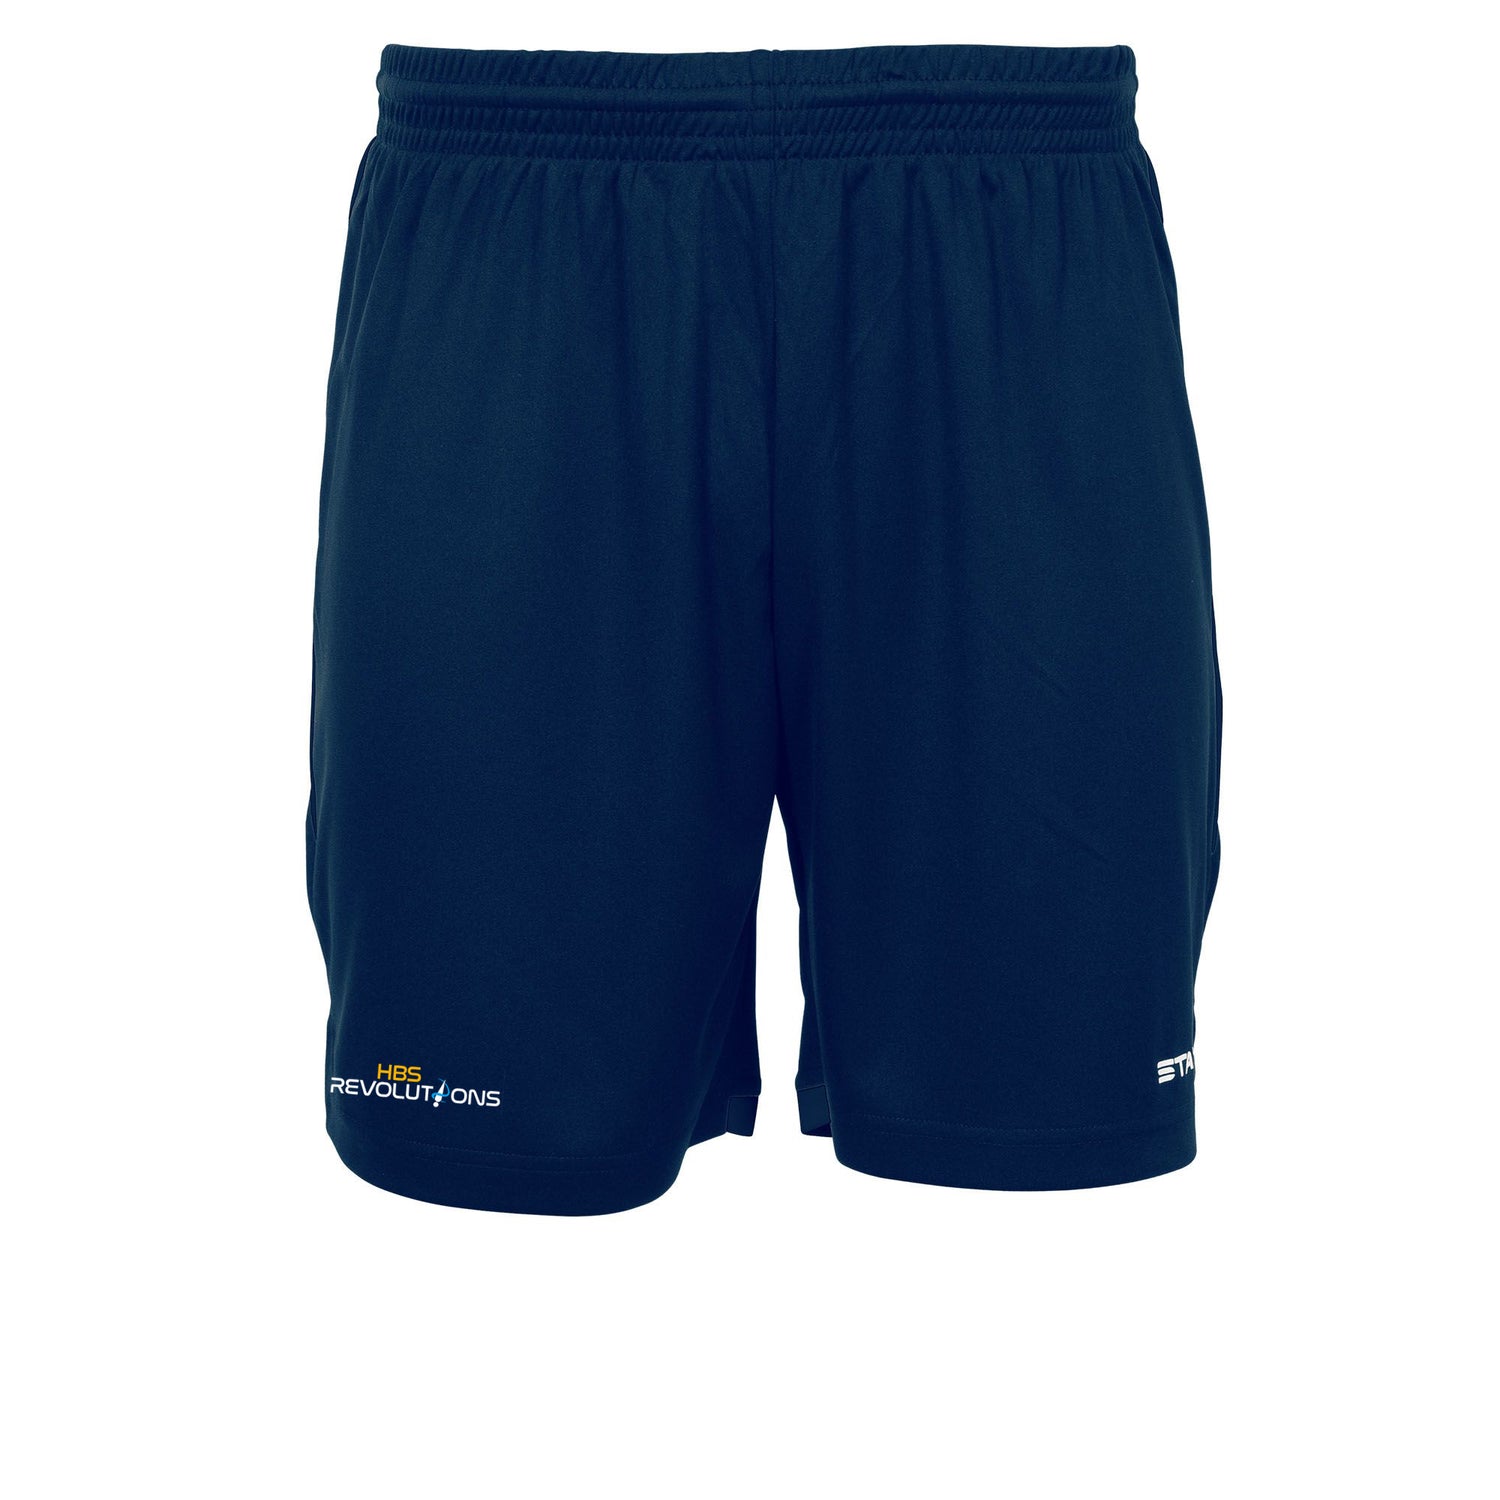 HBS Revolutions Shorts (Men's)